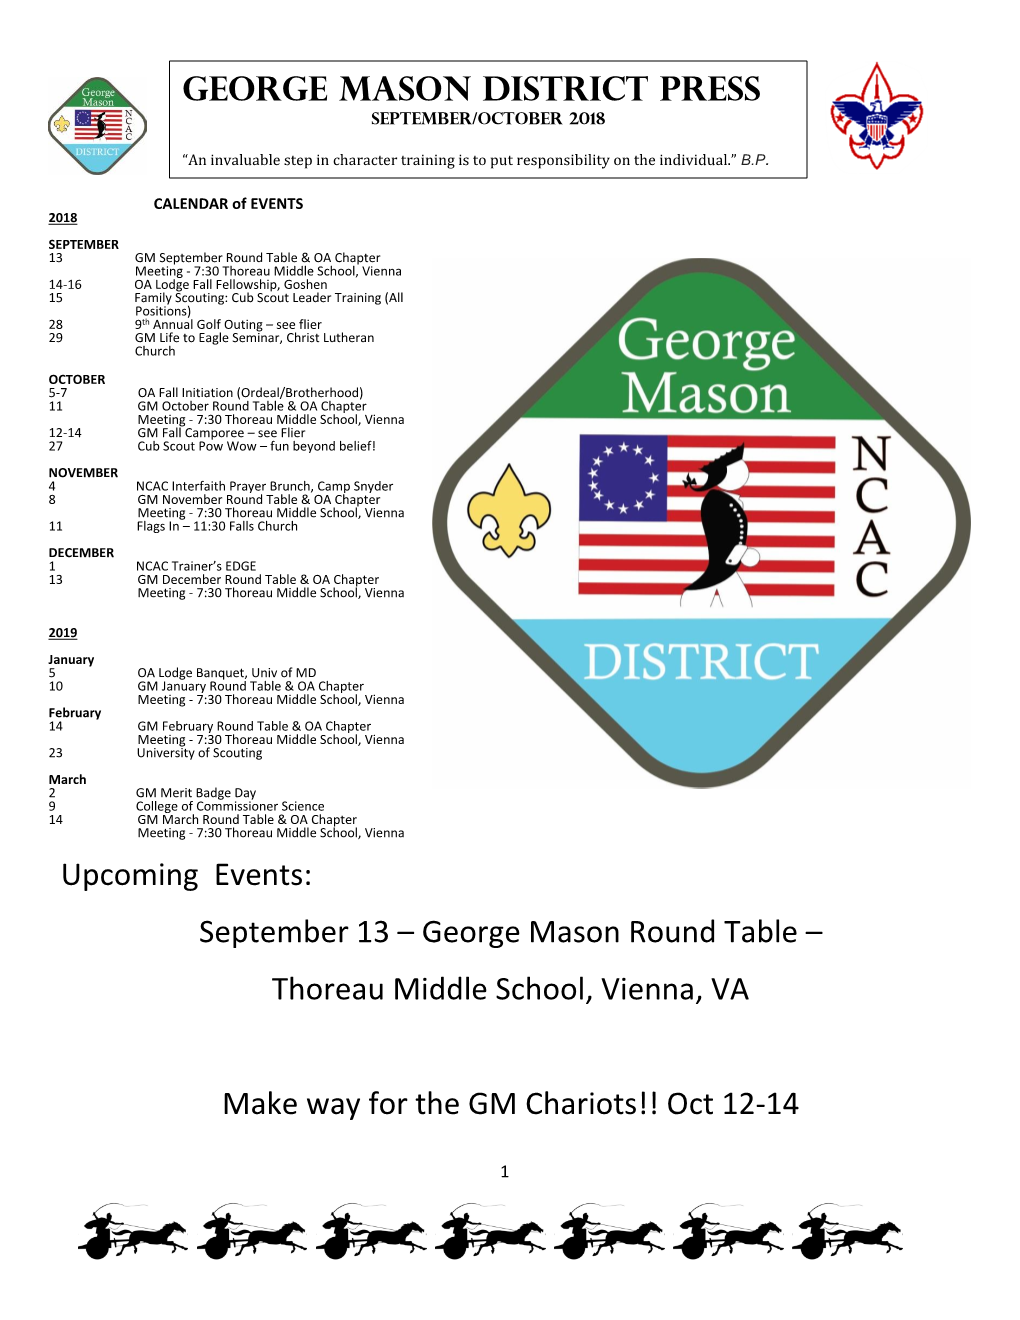 George Mason Round Table – Thoreau Middle School, Vienna, VA